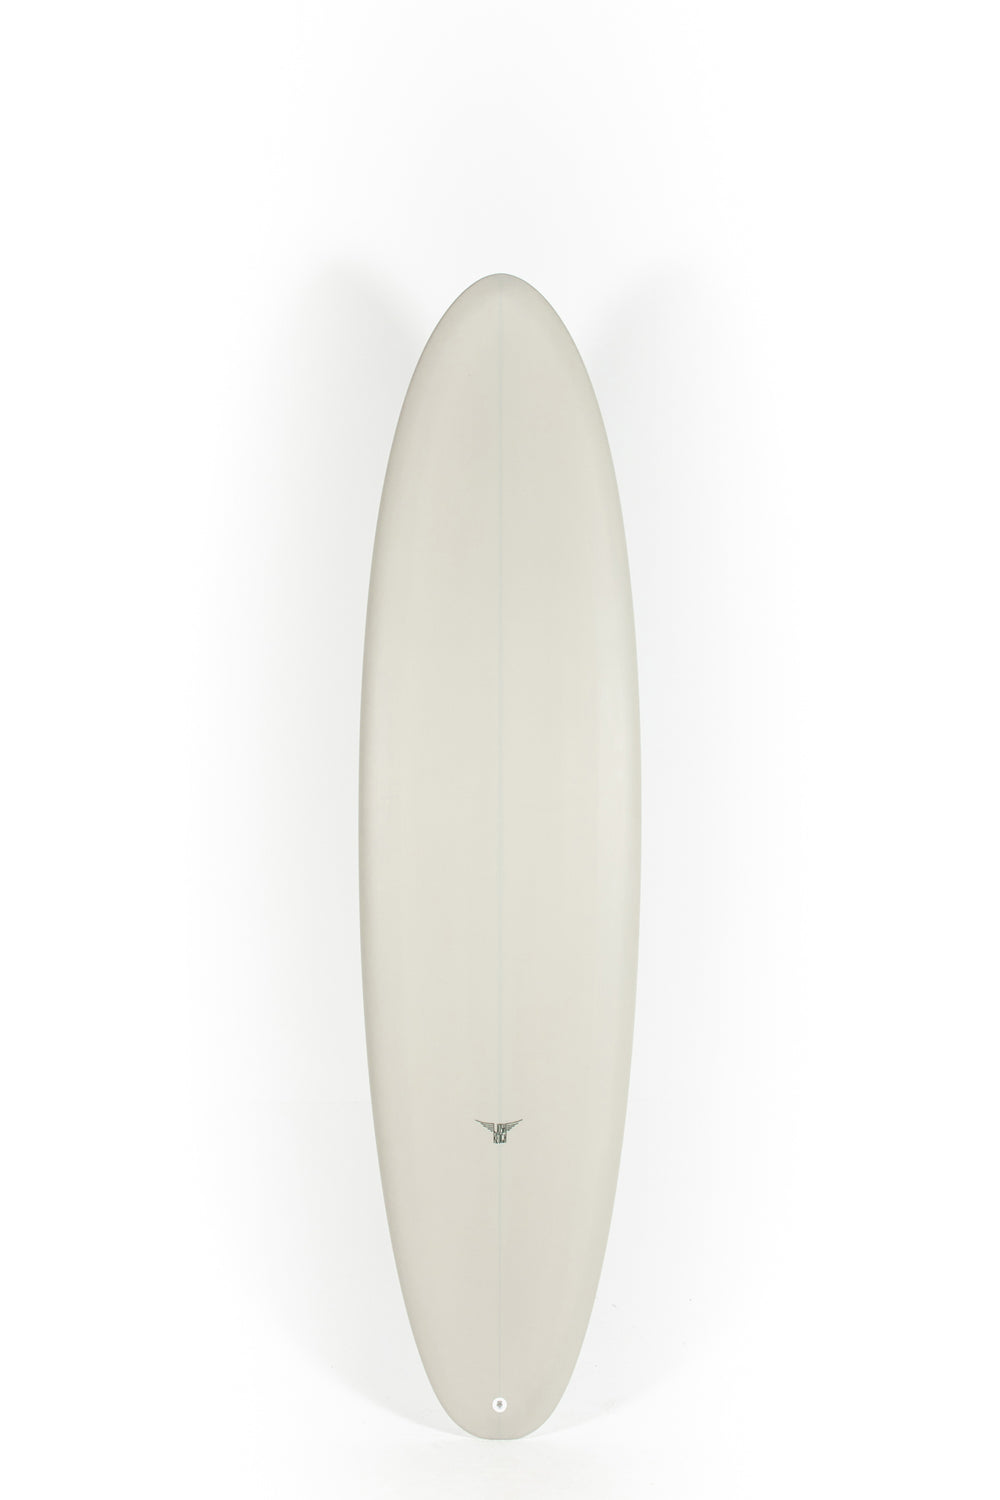 Pukas Surf Shop_Joshua Keogh Surfboard - LIBERATOR SINGLE by Joshua Keogh - 7'4